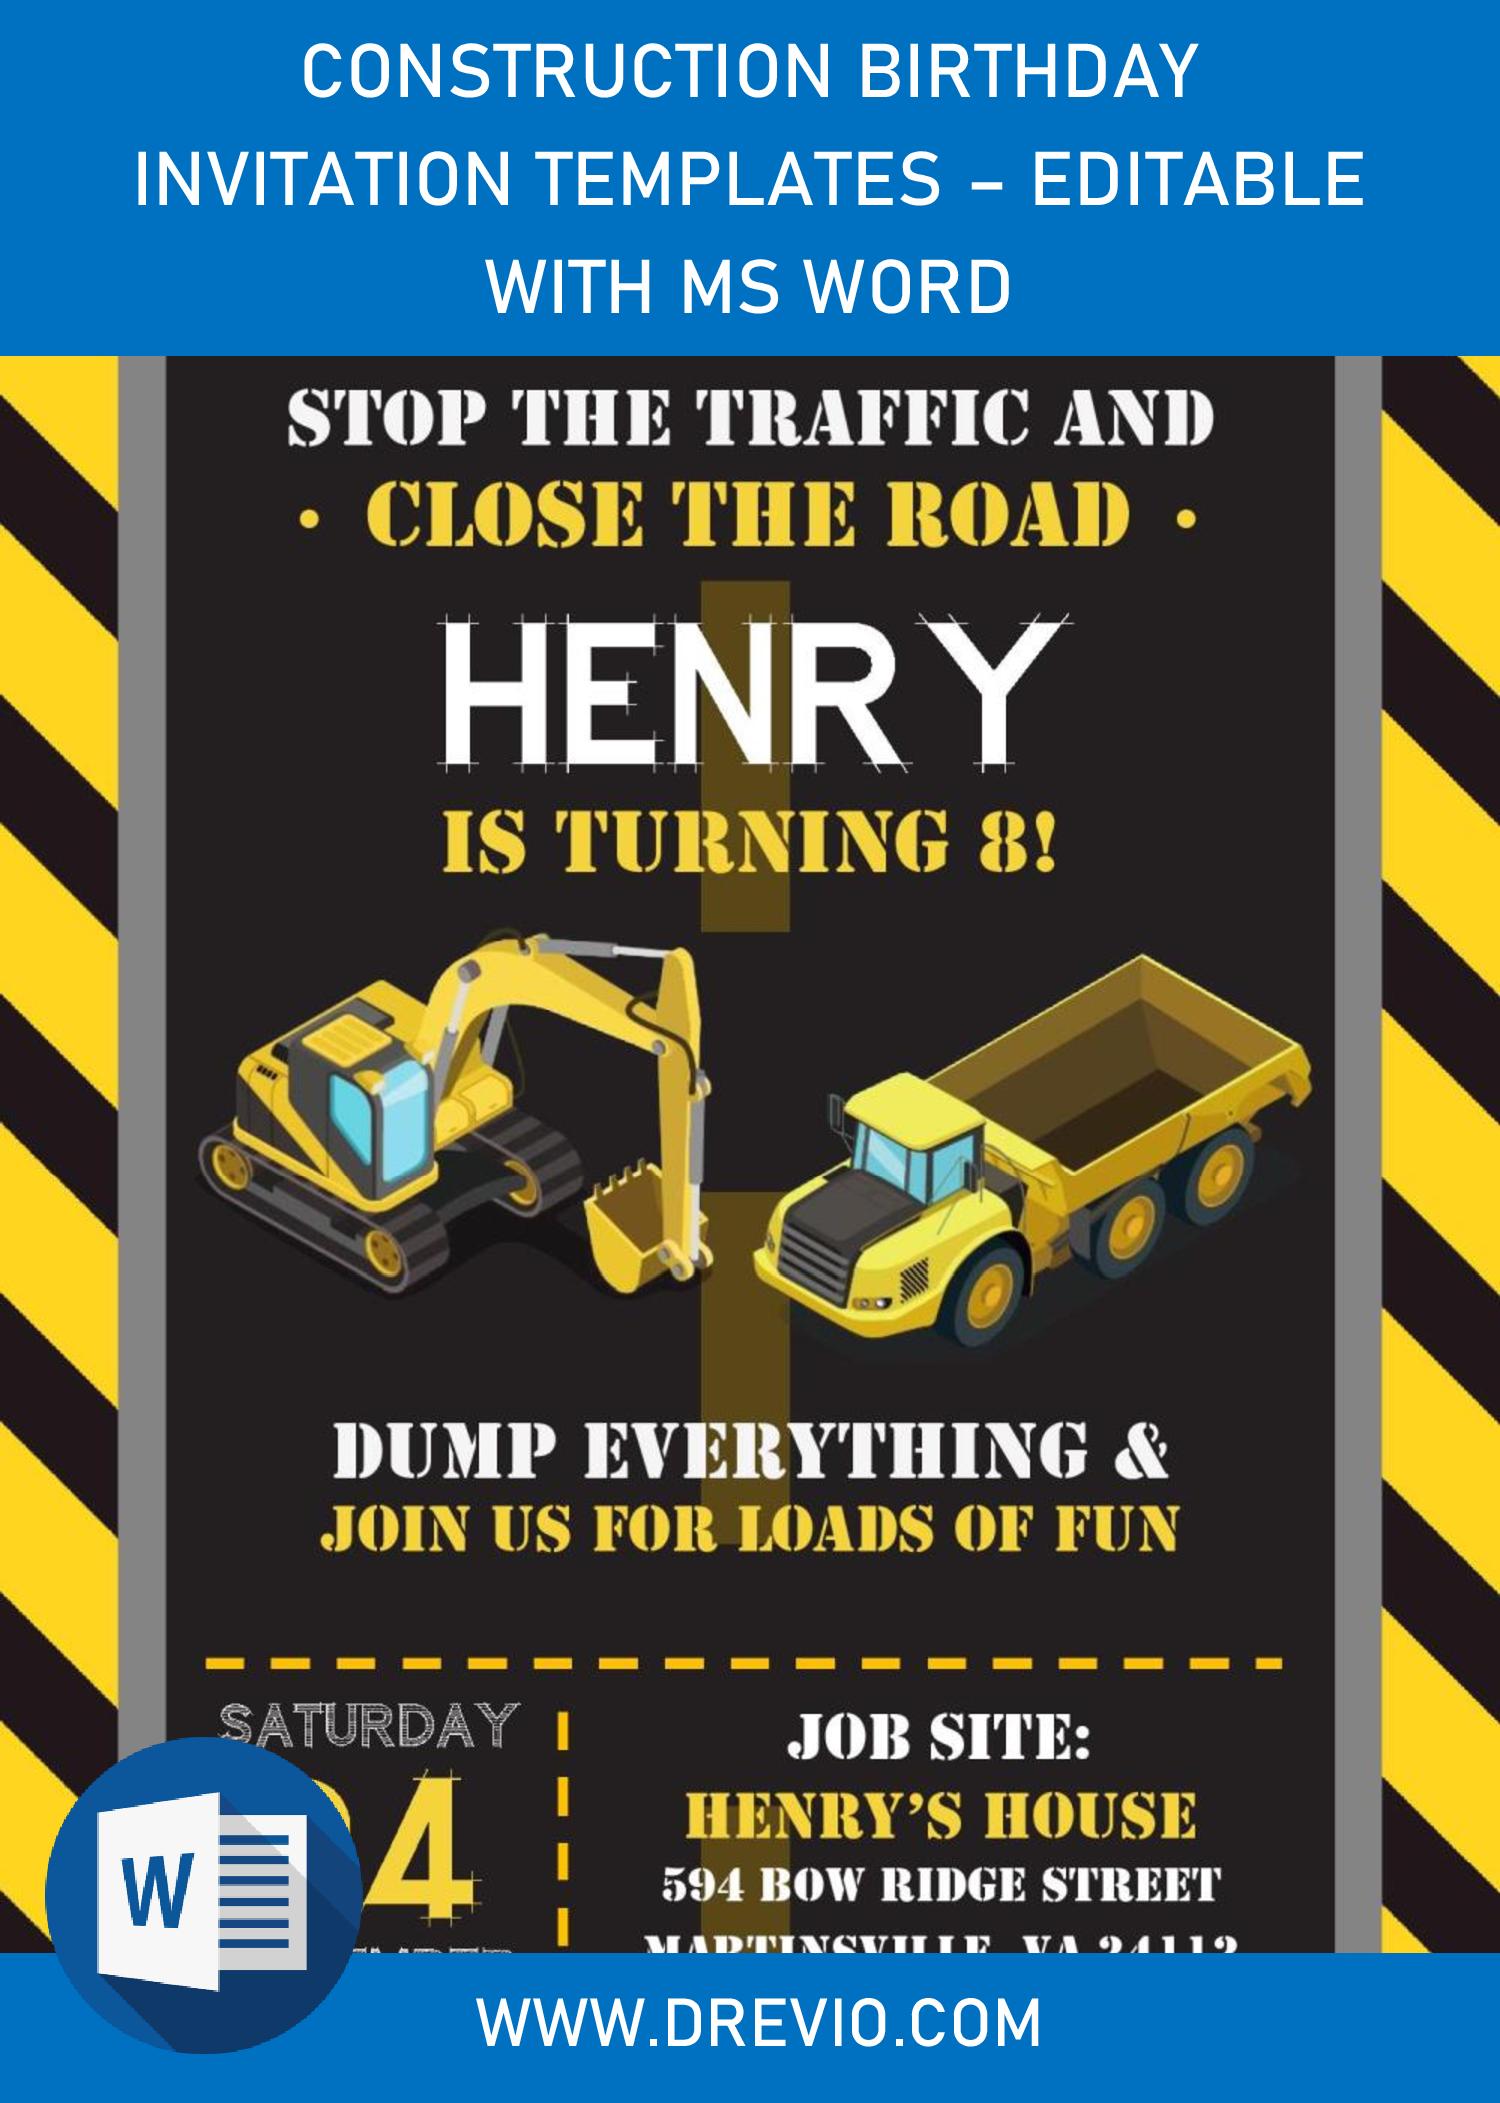 Construction Birthday Party Invitation PDF or jpg Construction Party Invitation Truck invitation